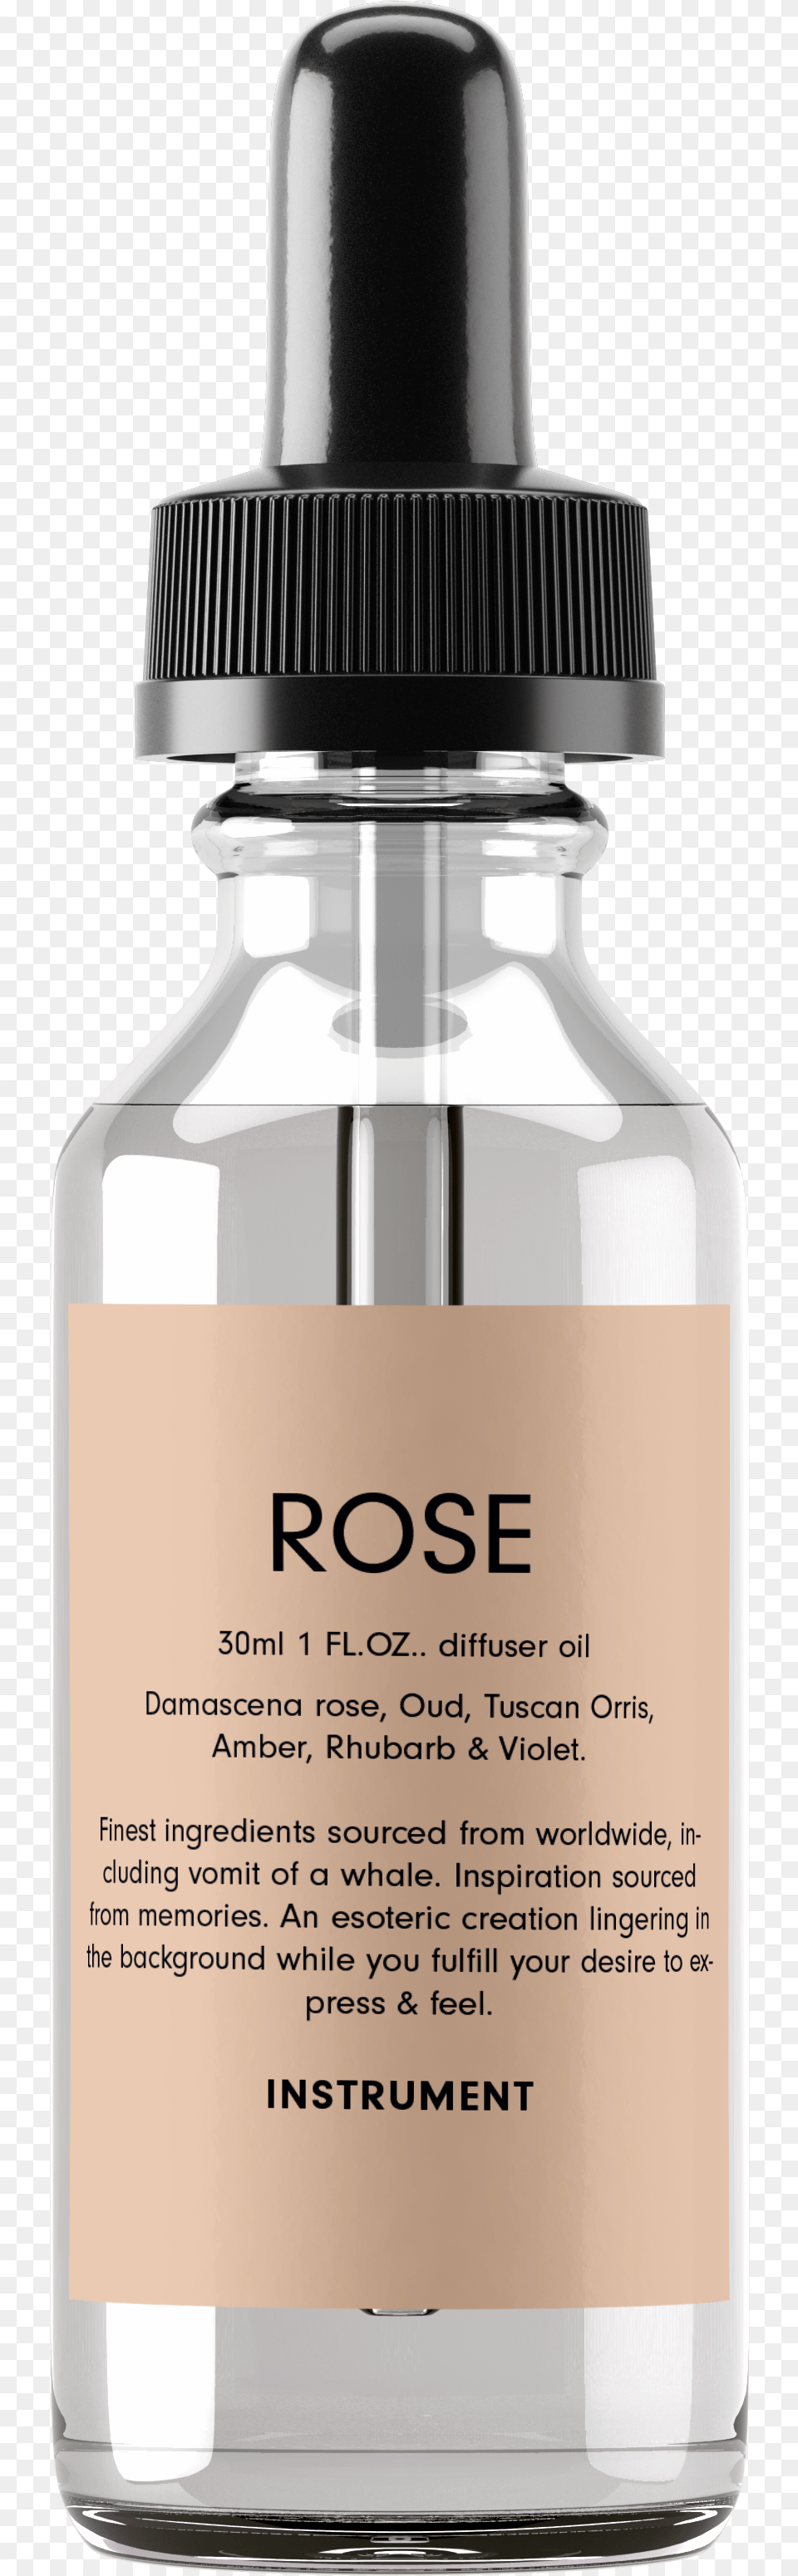 Image Of Rose Oil, Bottle, Cosmetics, Perfume, Ink Bottle Png